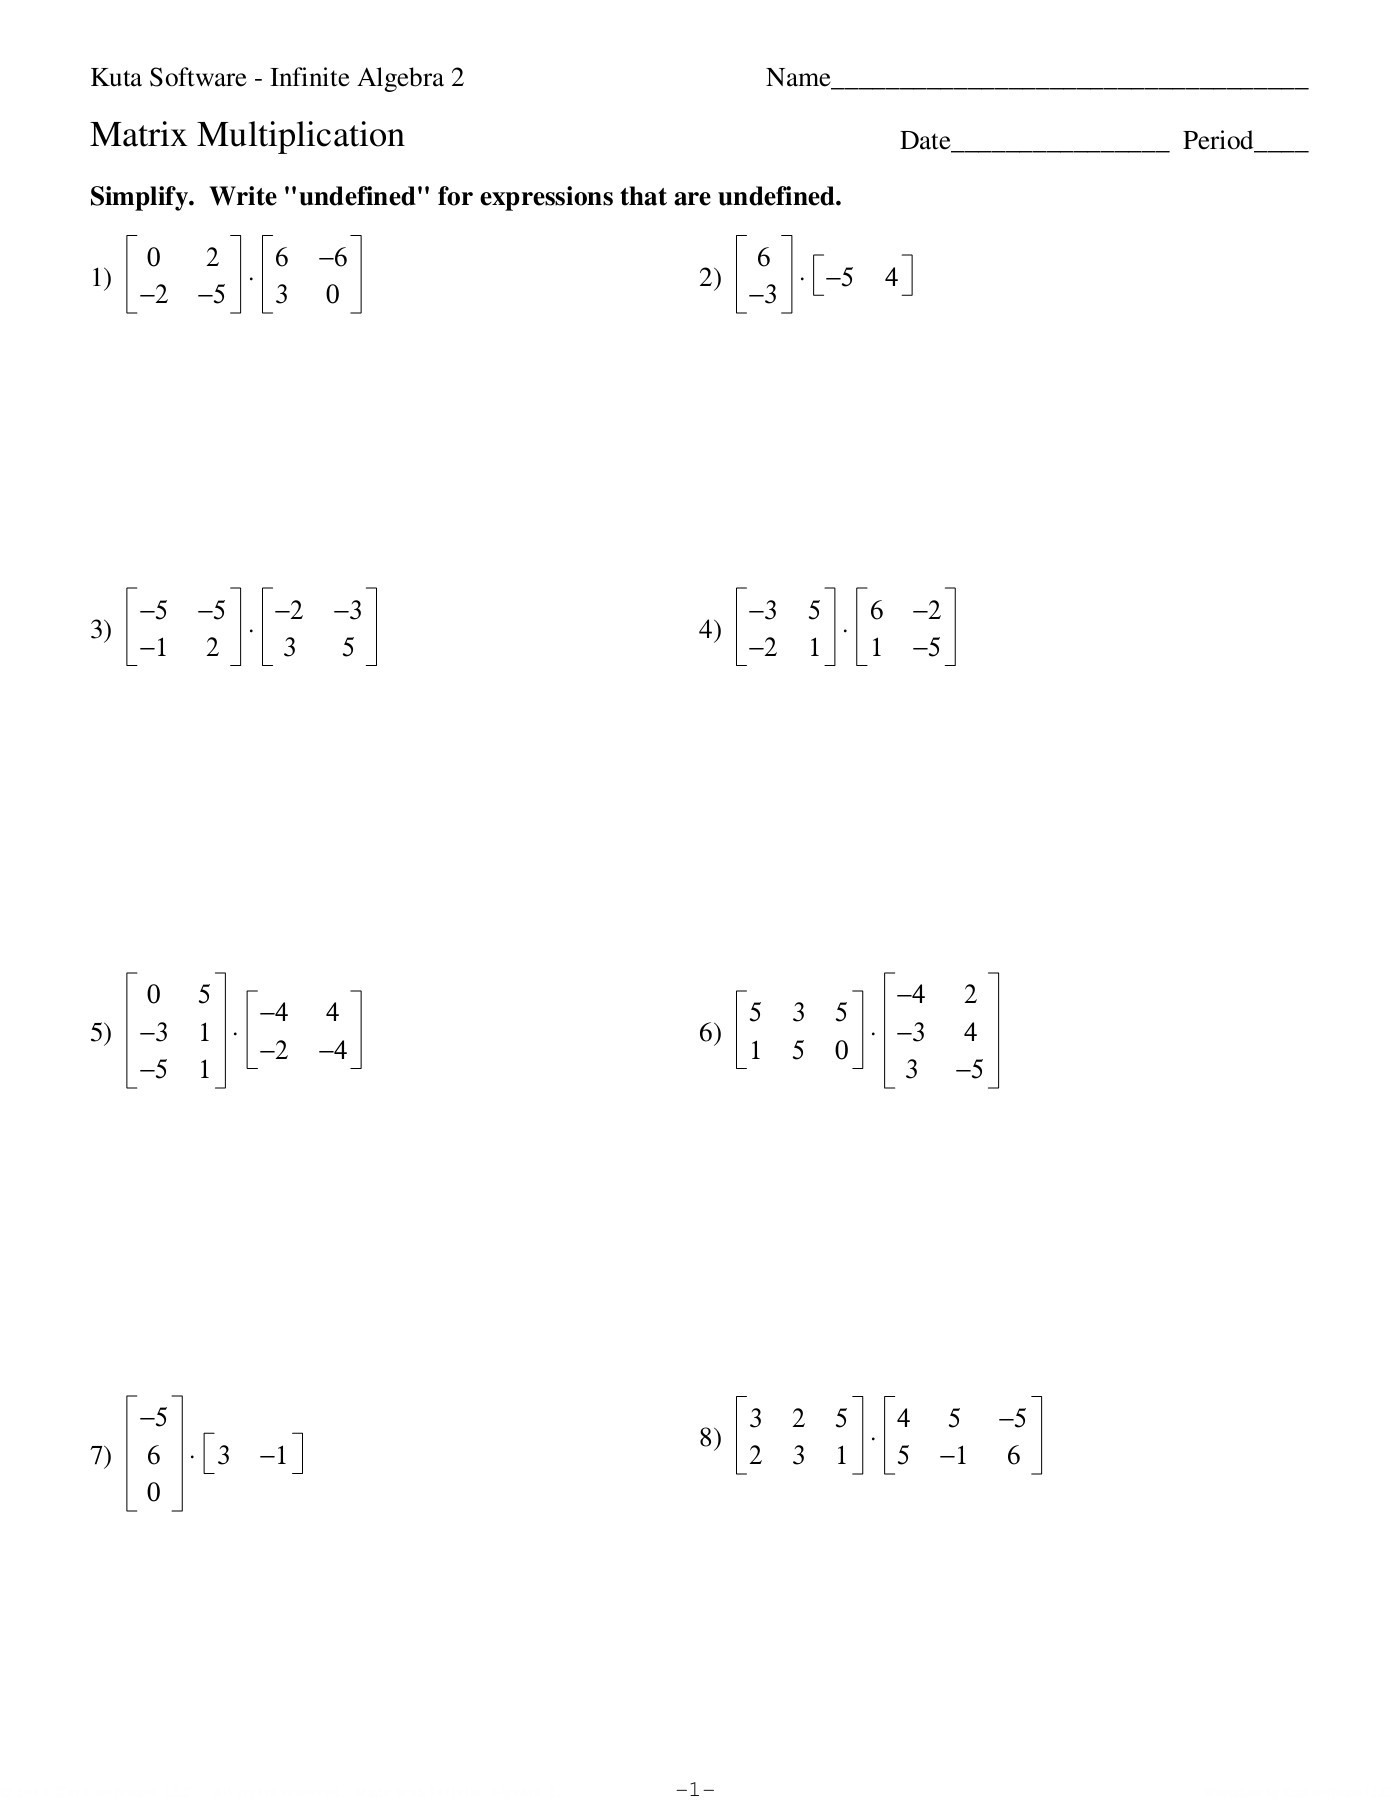 matrix-multiplication-date-period-kuta-softre-llc-pages-db-excel